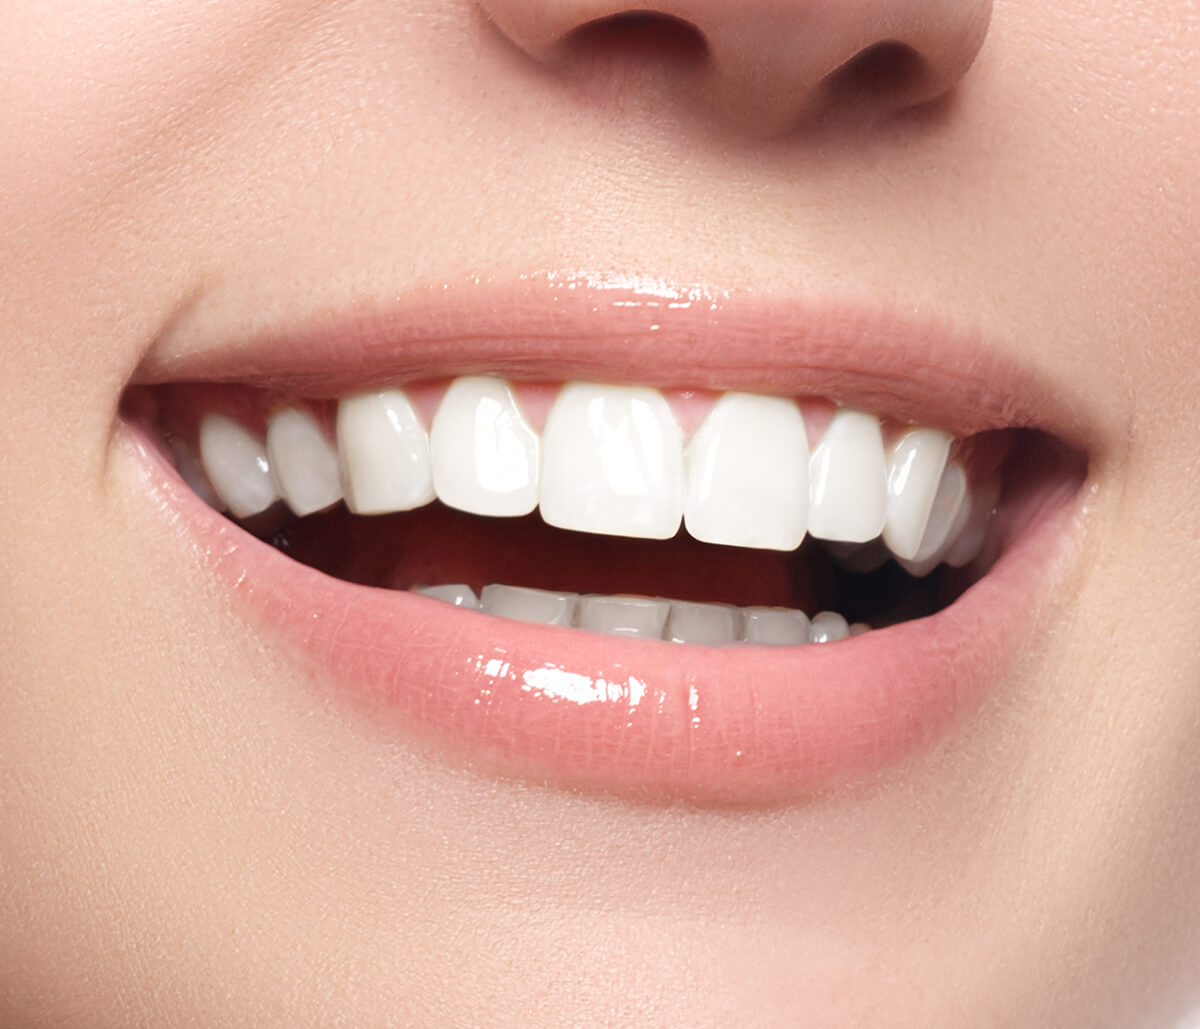 Teeth Whitening Treatments in Kirkland WA Area